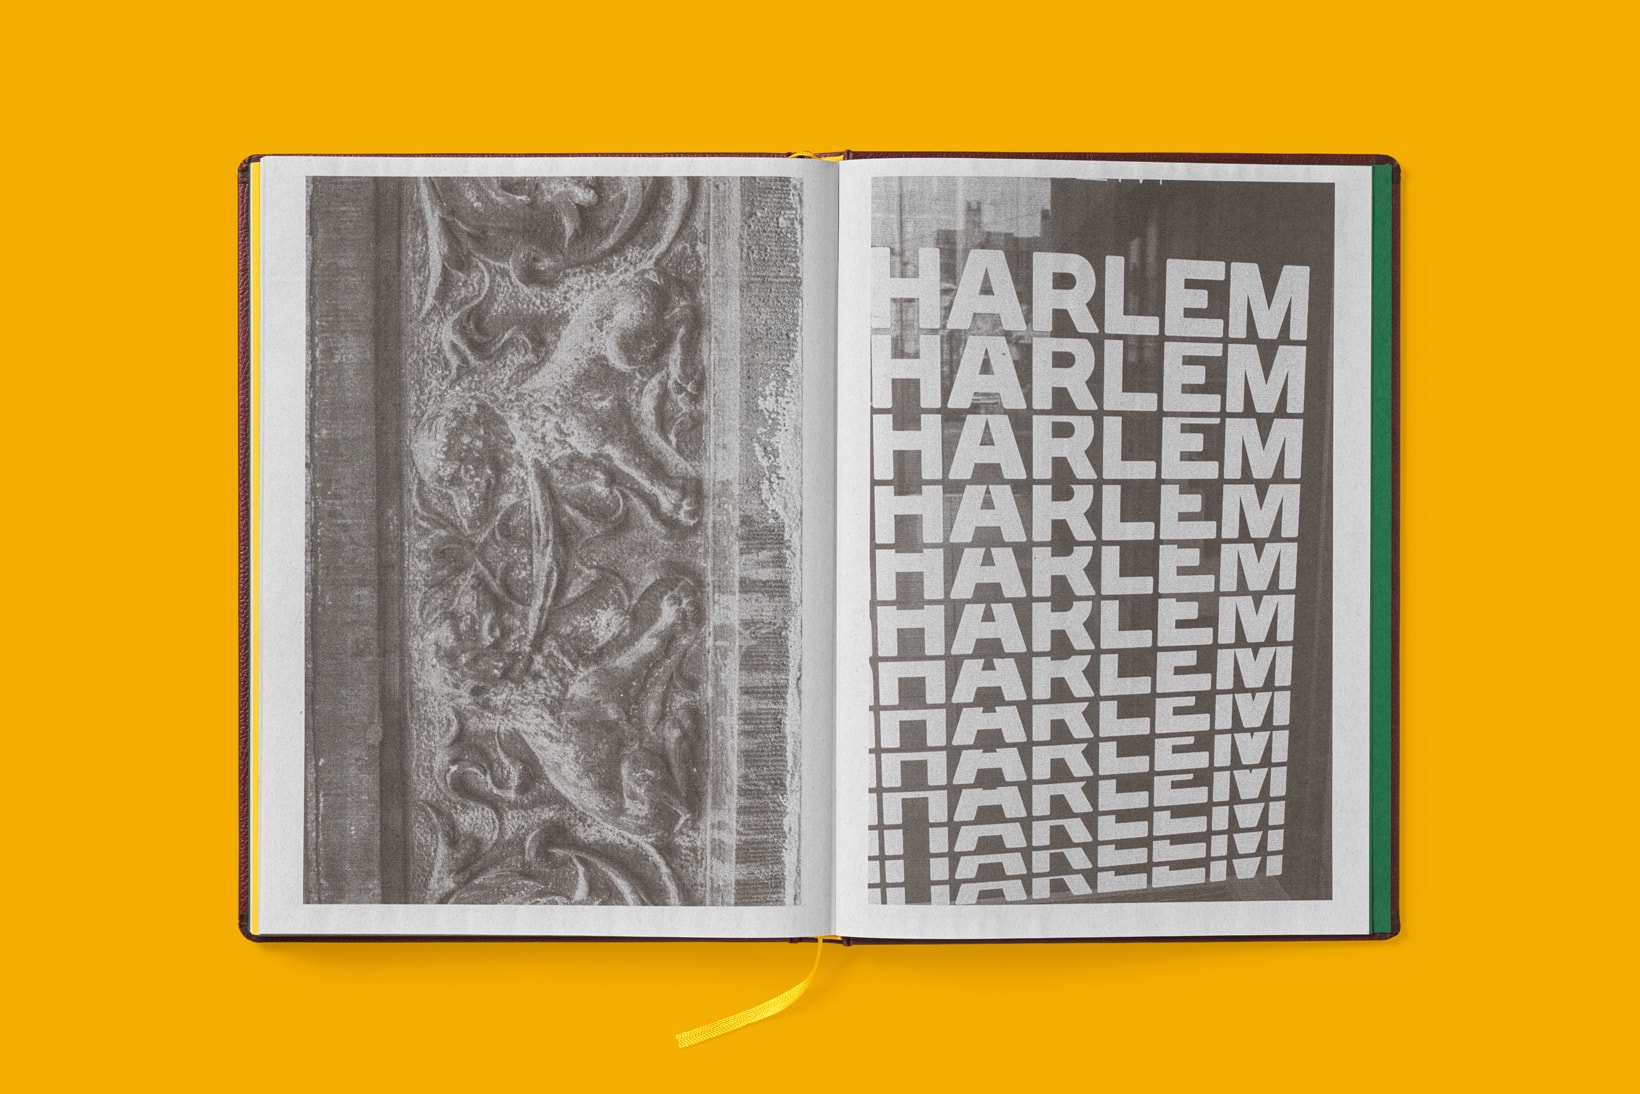 Gucci Dapper Dan's Harlem Book Ari Marcopolous Signs